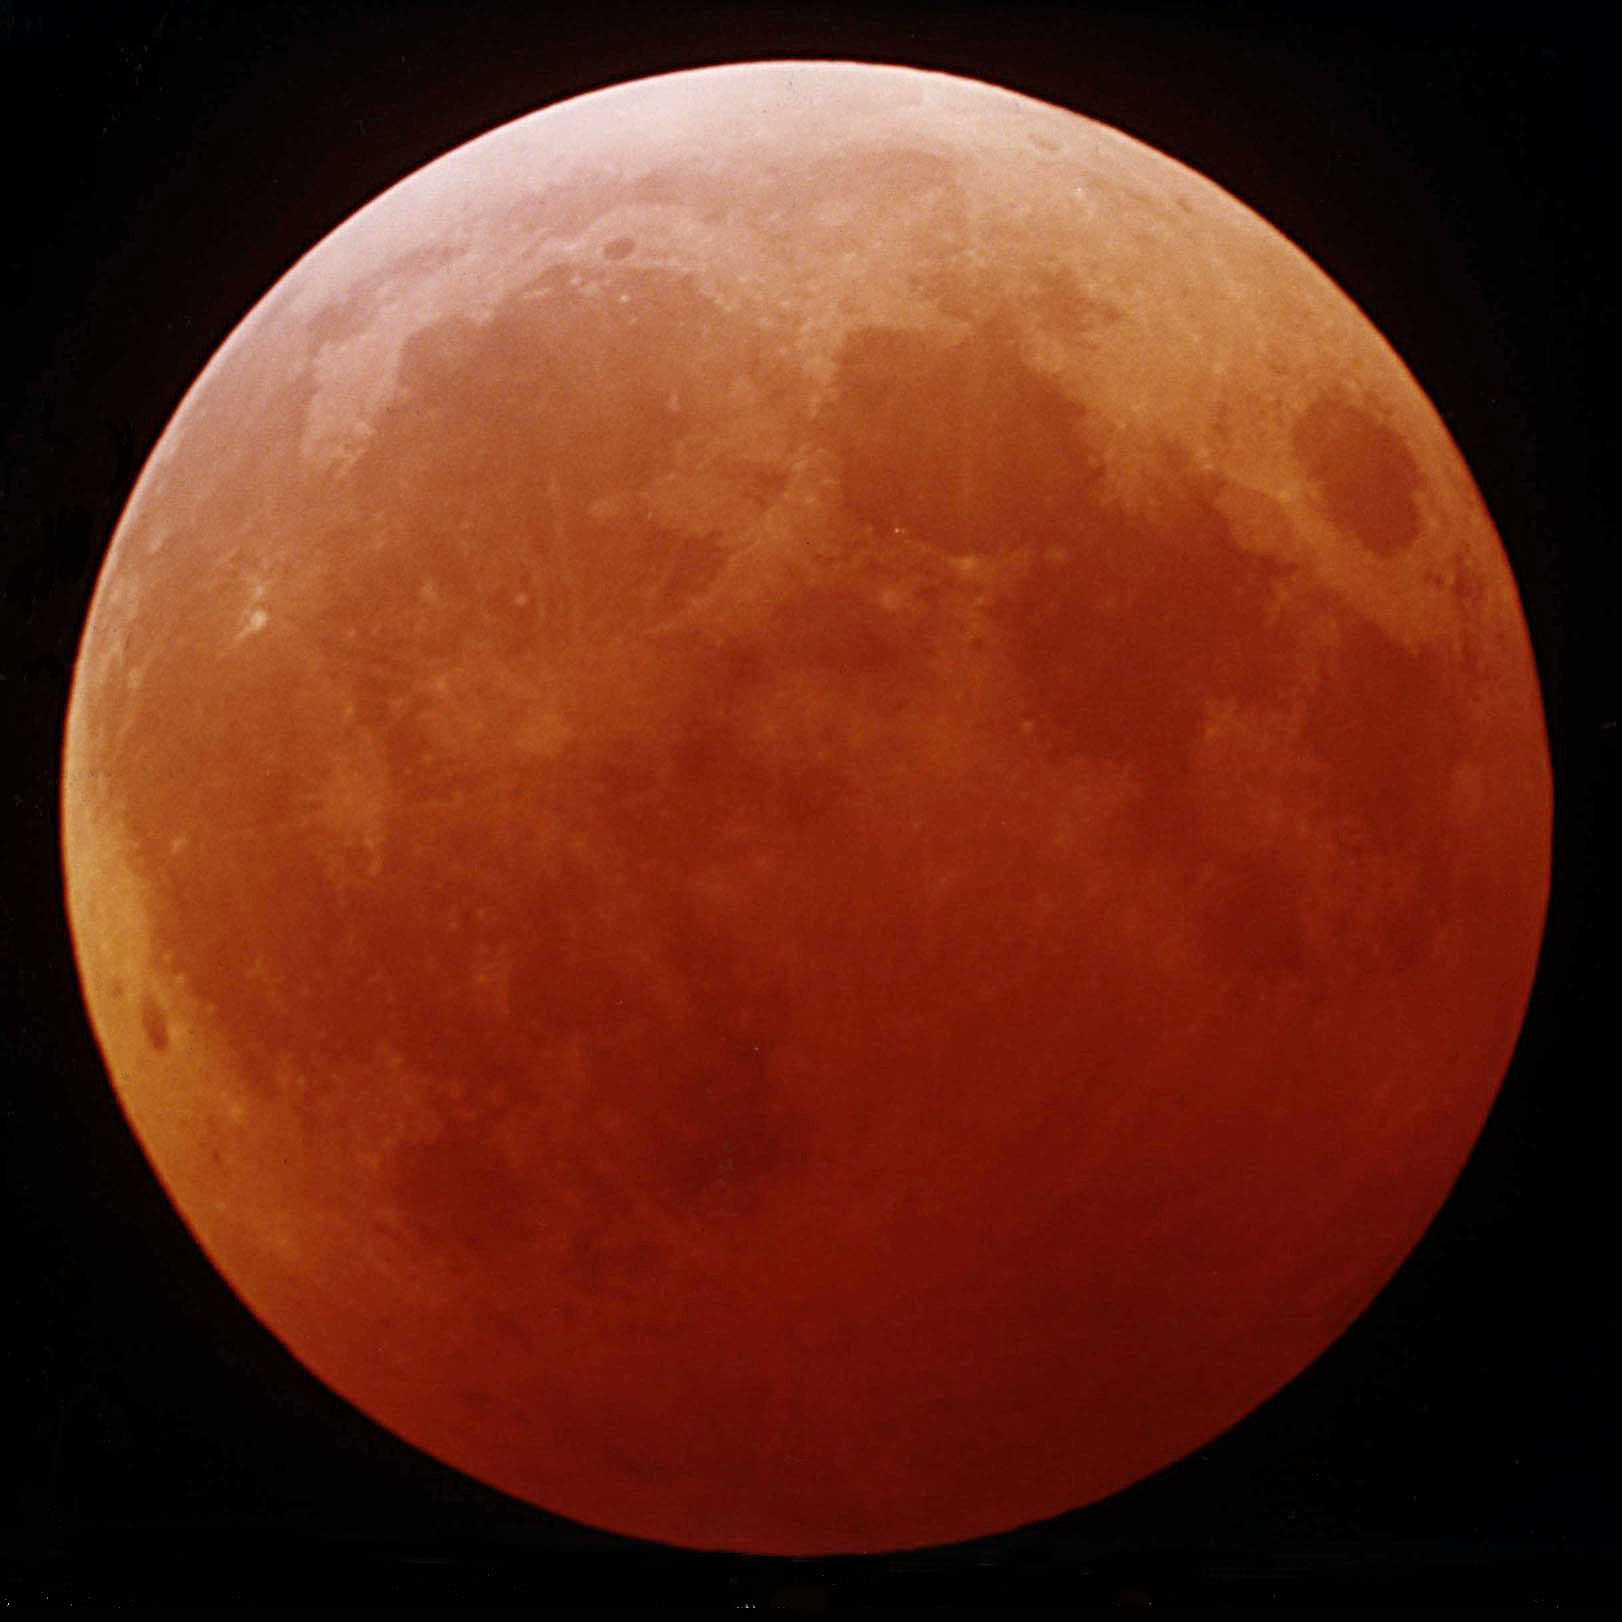 2001: A Total Lunar Eclipse